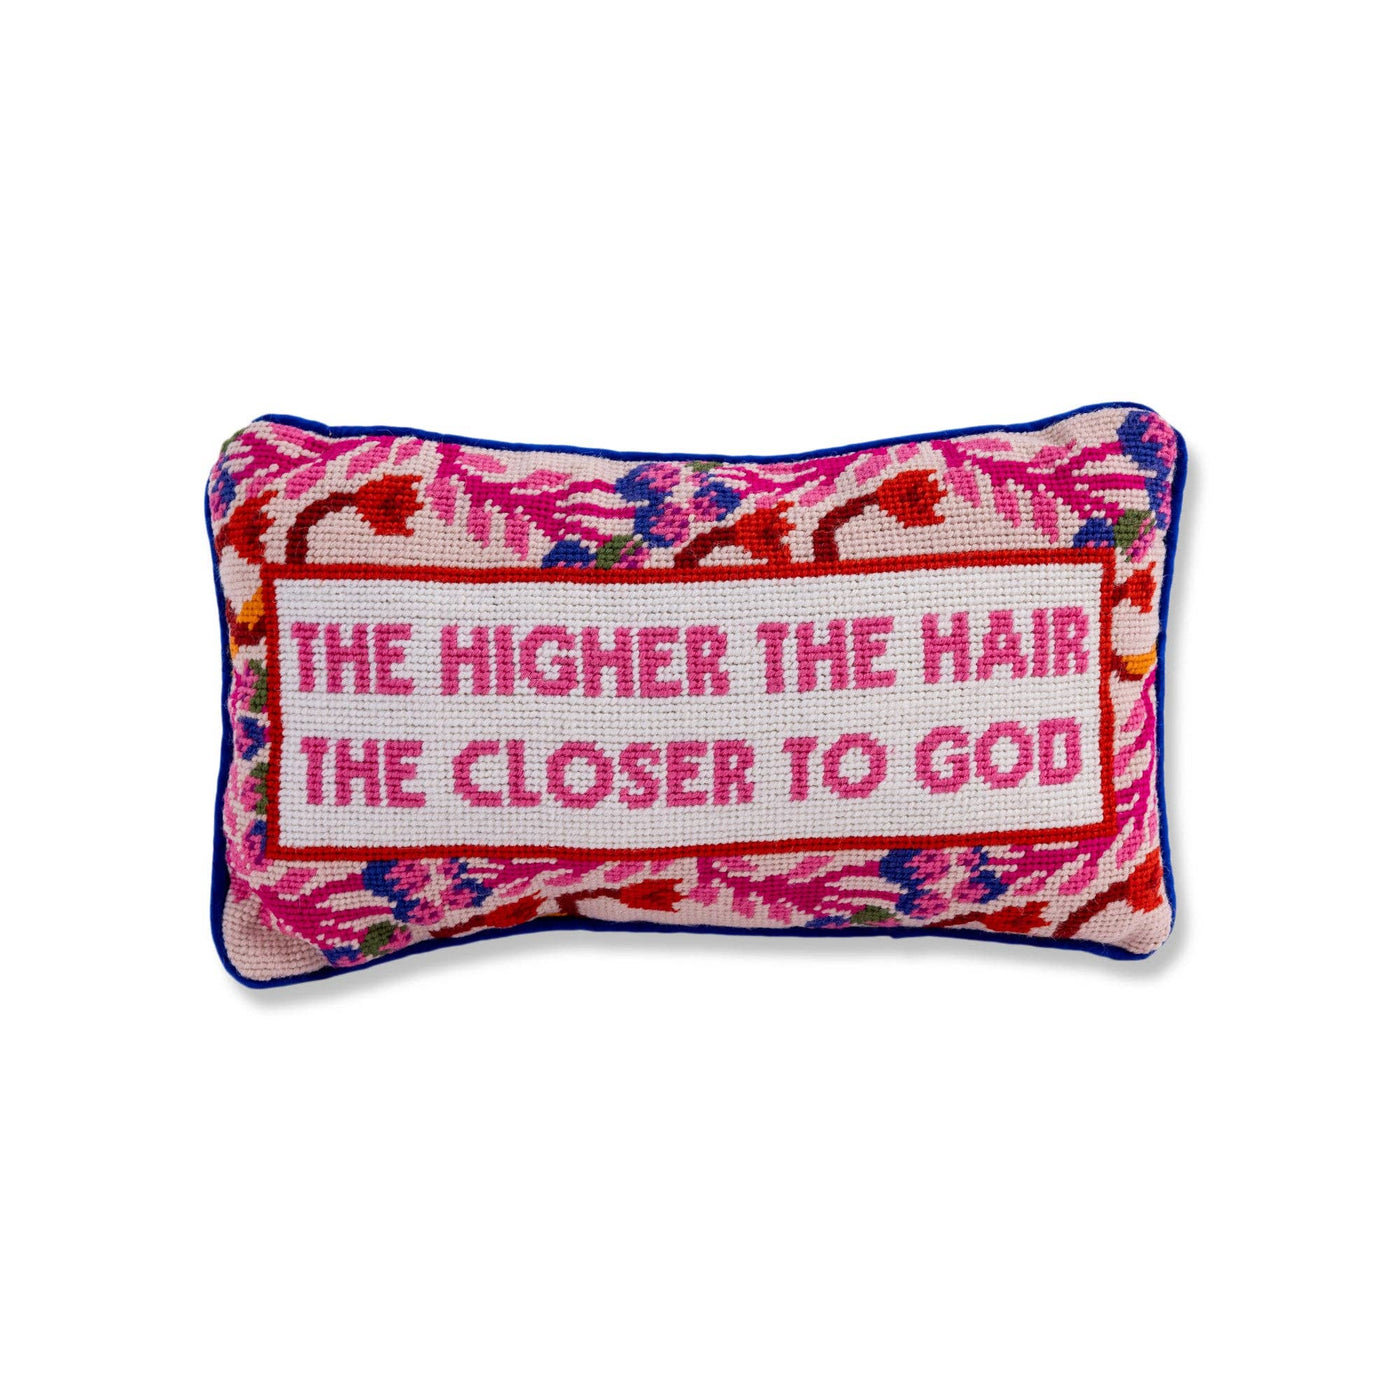 Furbish Studio - Higher The Hair Needlepoint Pillow